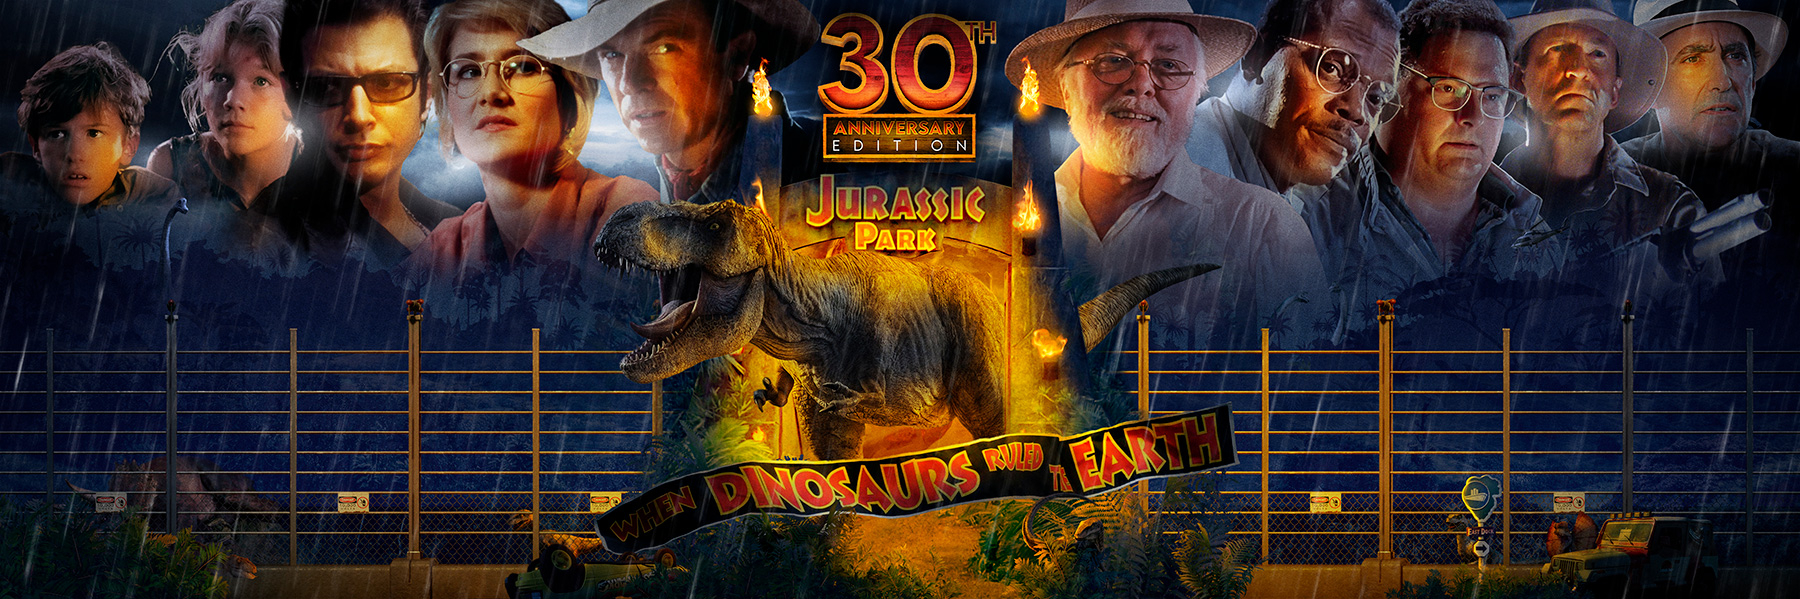 Jurassic Park 30th Anniversary